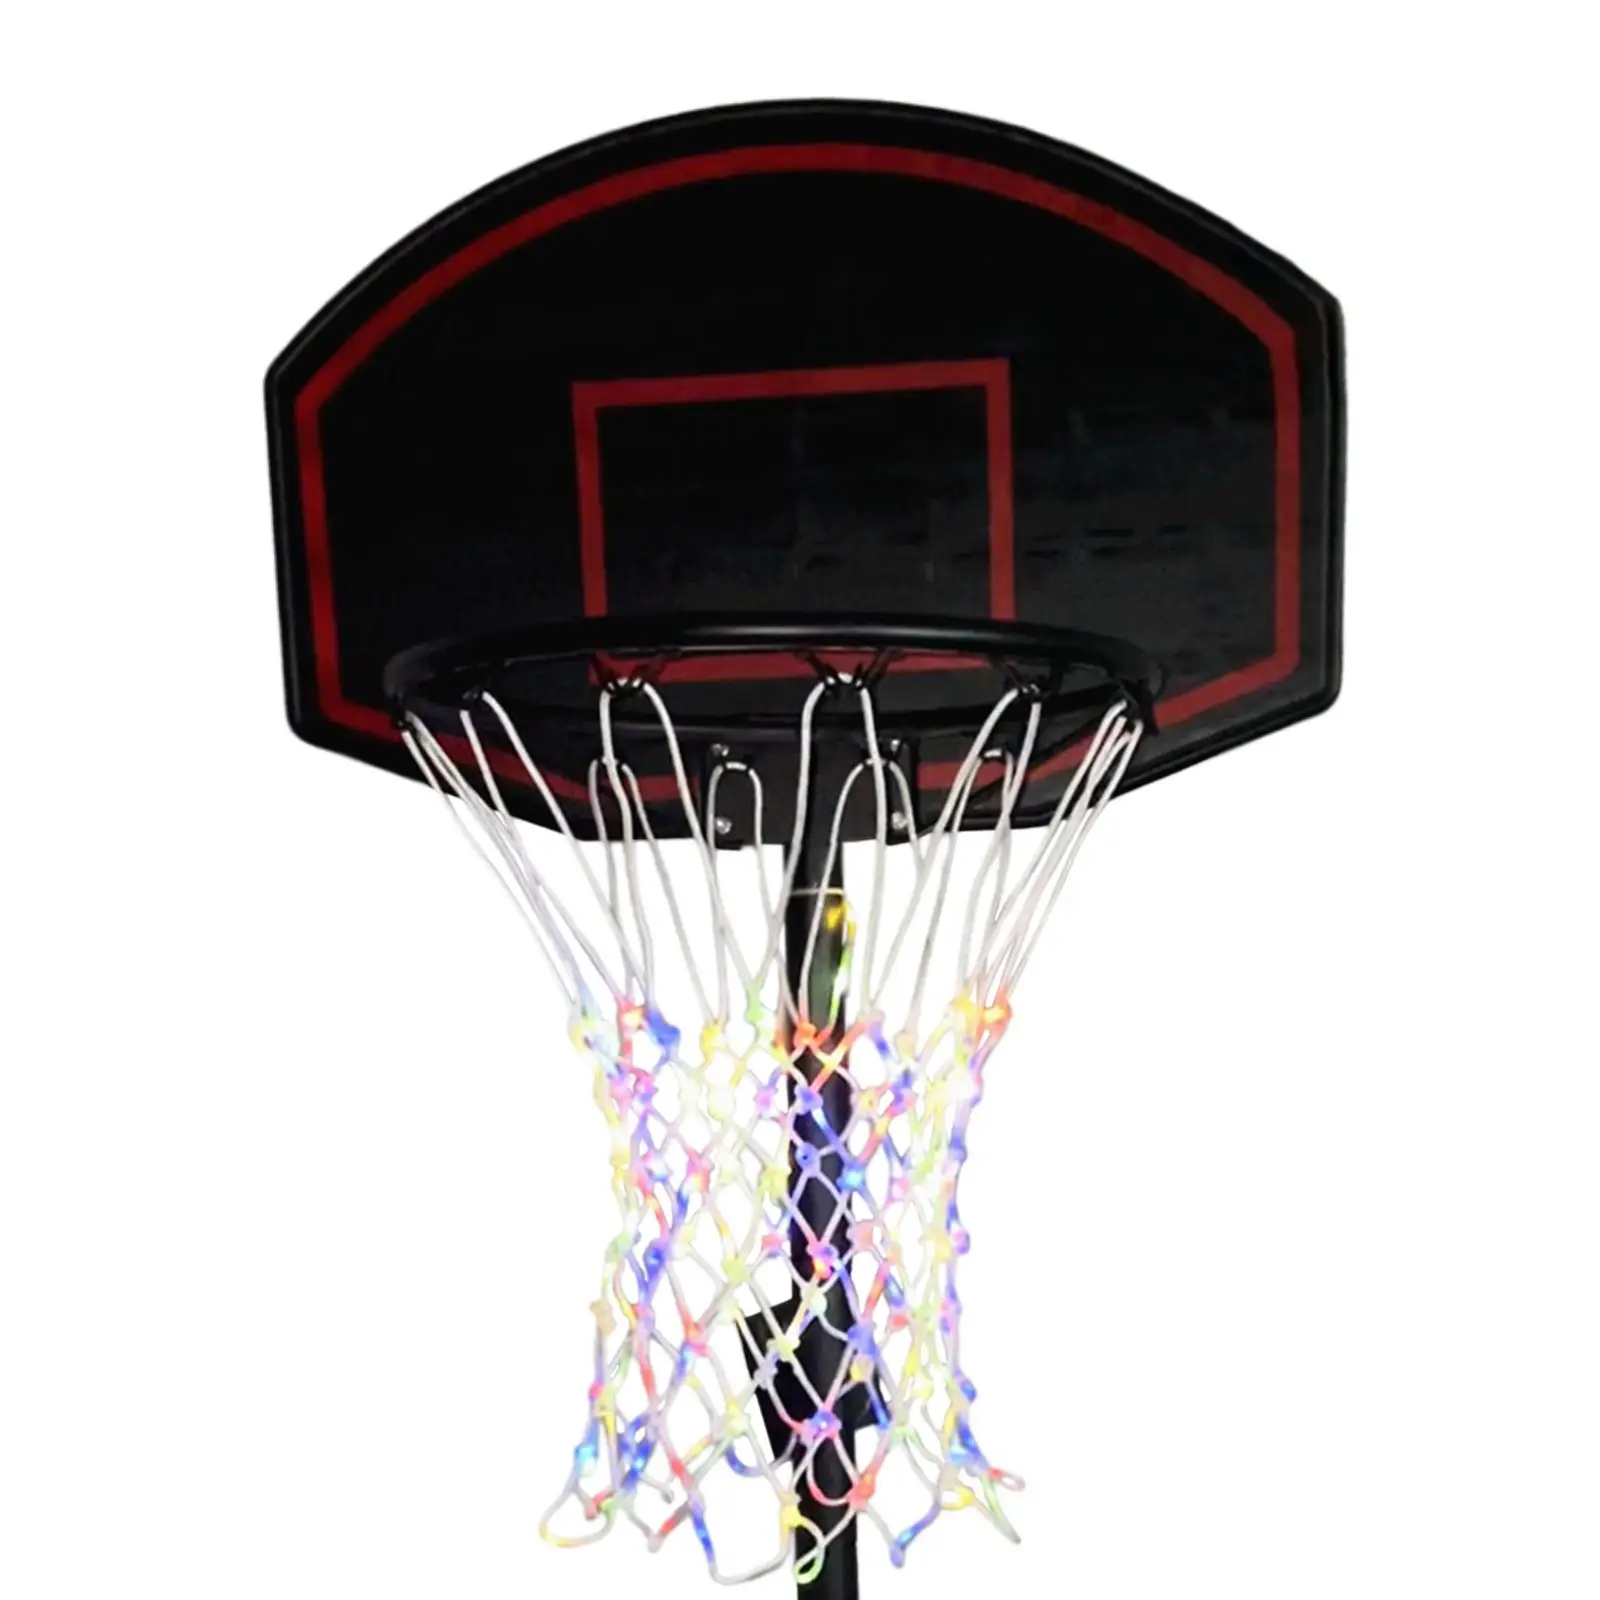 LED Basketball hoop Outdoor Luminous Nightlight Basketball Net for Outdoor Game Basketball Training Sports Backyard Adults